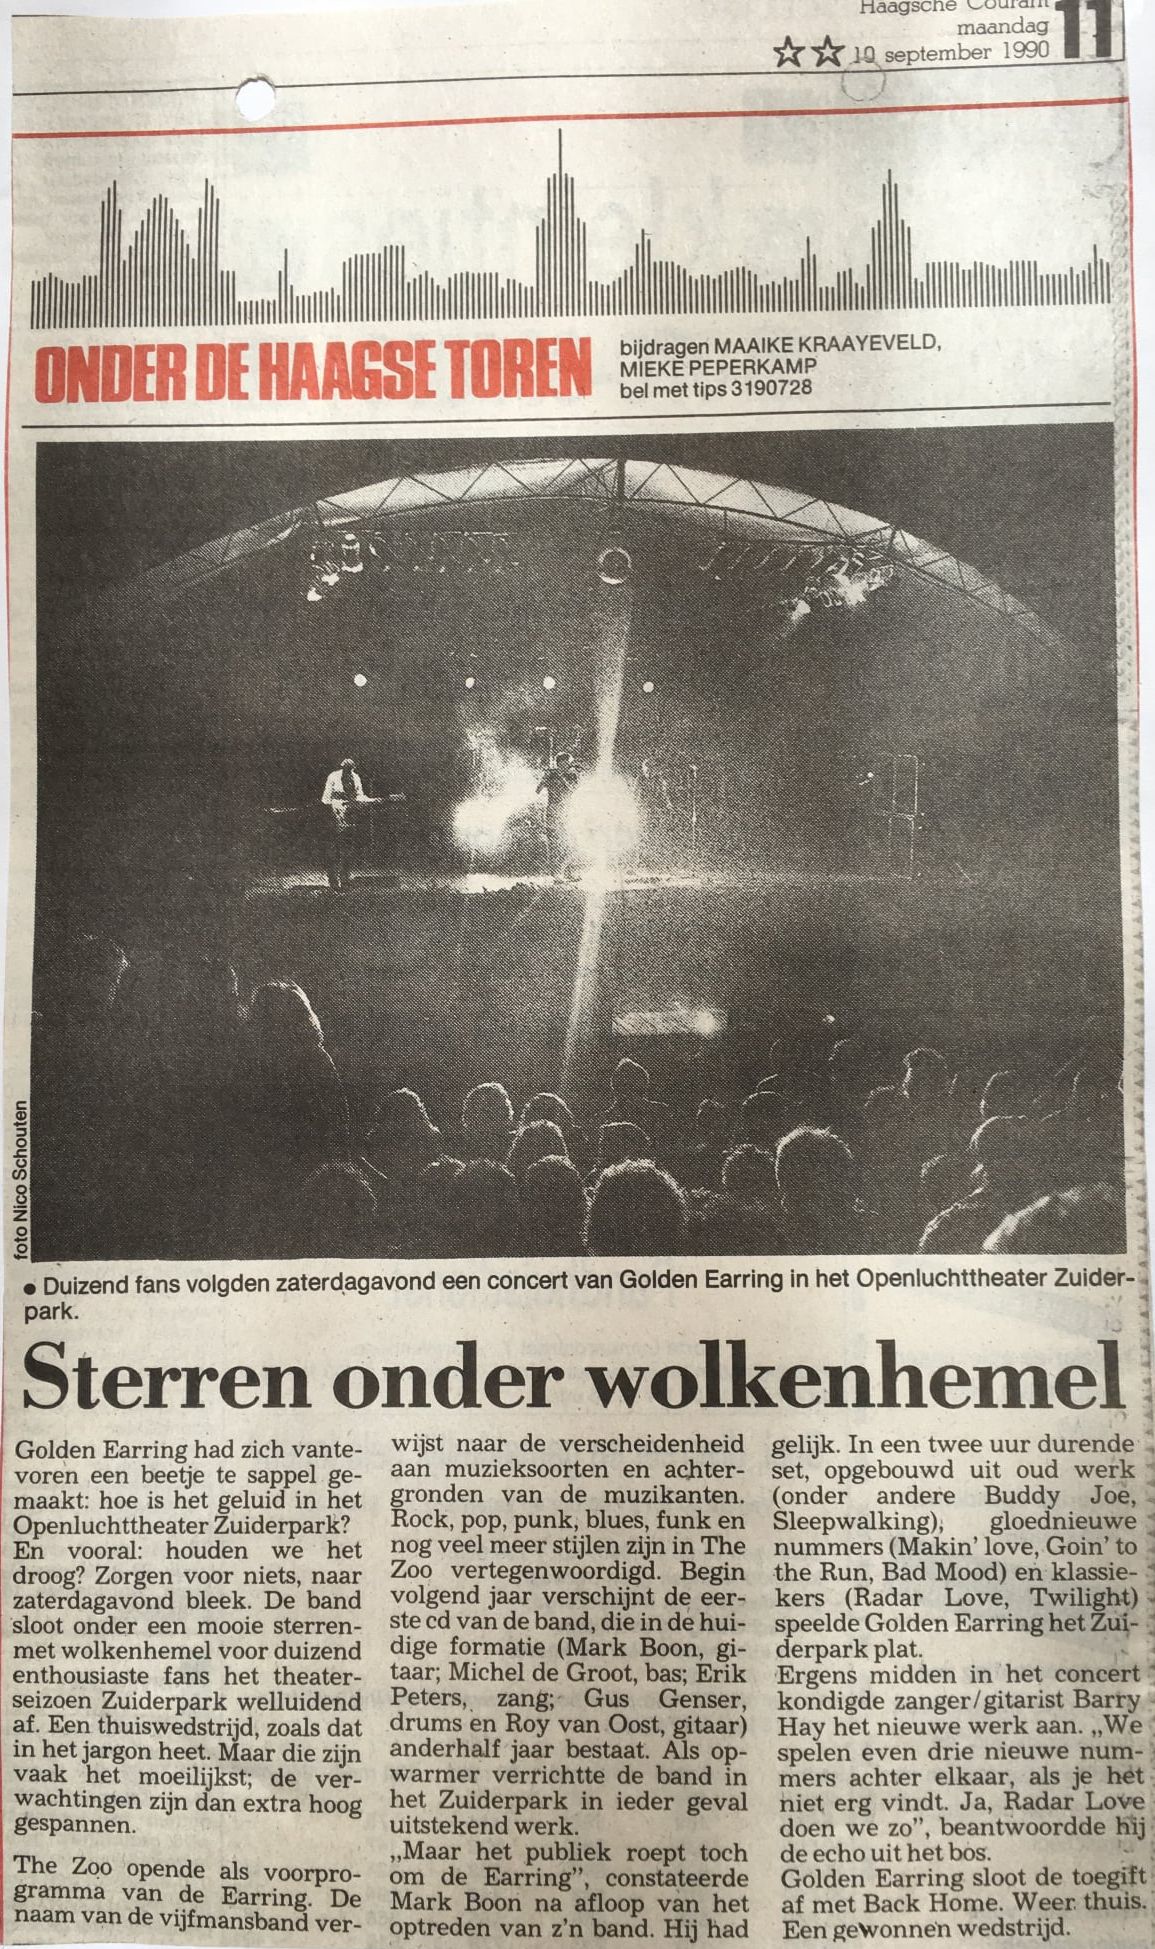 Haagsche Courant Newspaper article with Golden Earring show review September 08 1990 Den Haag - Openluchtheater Zuiderpark (Collection Ria Brekelmans)